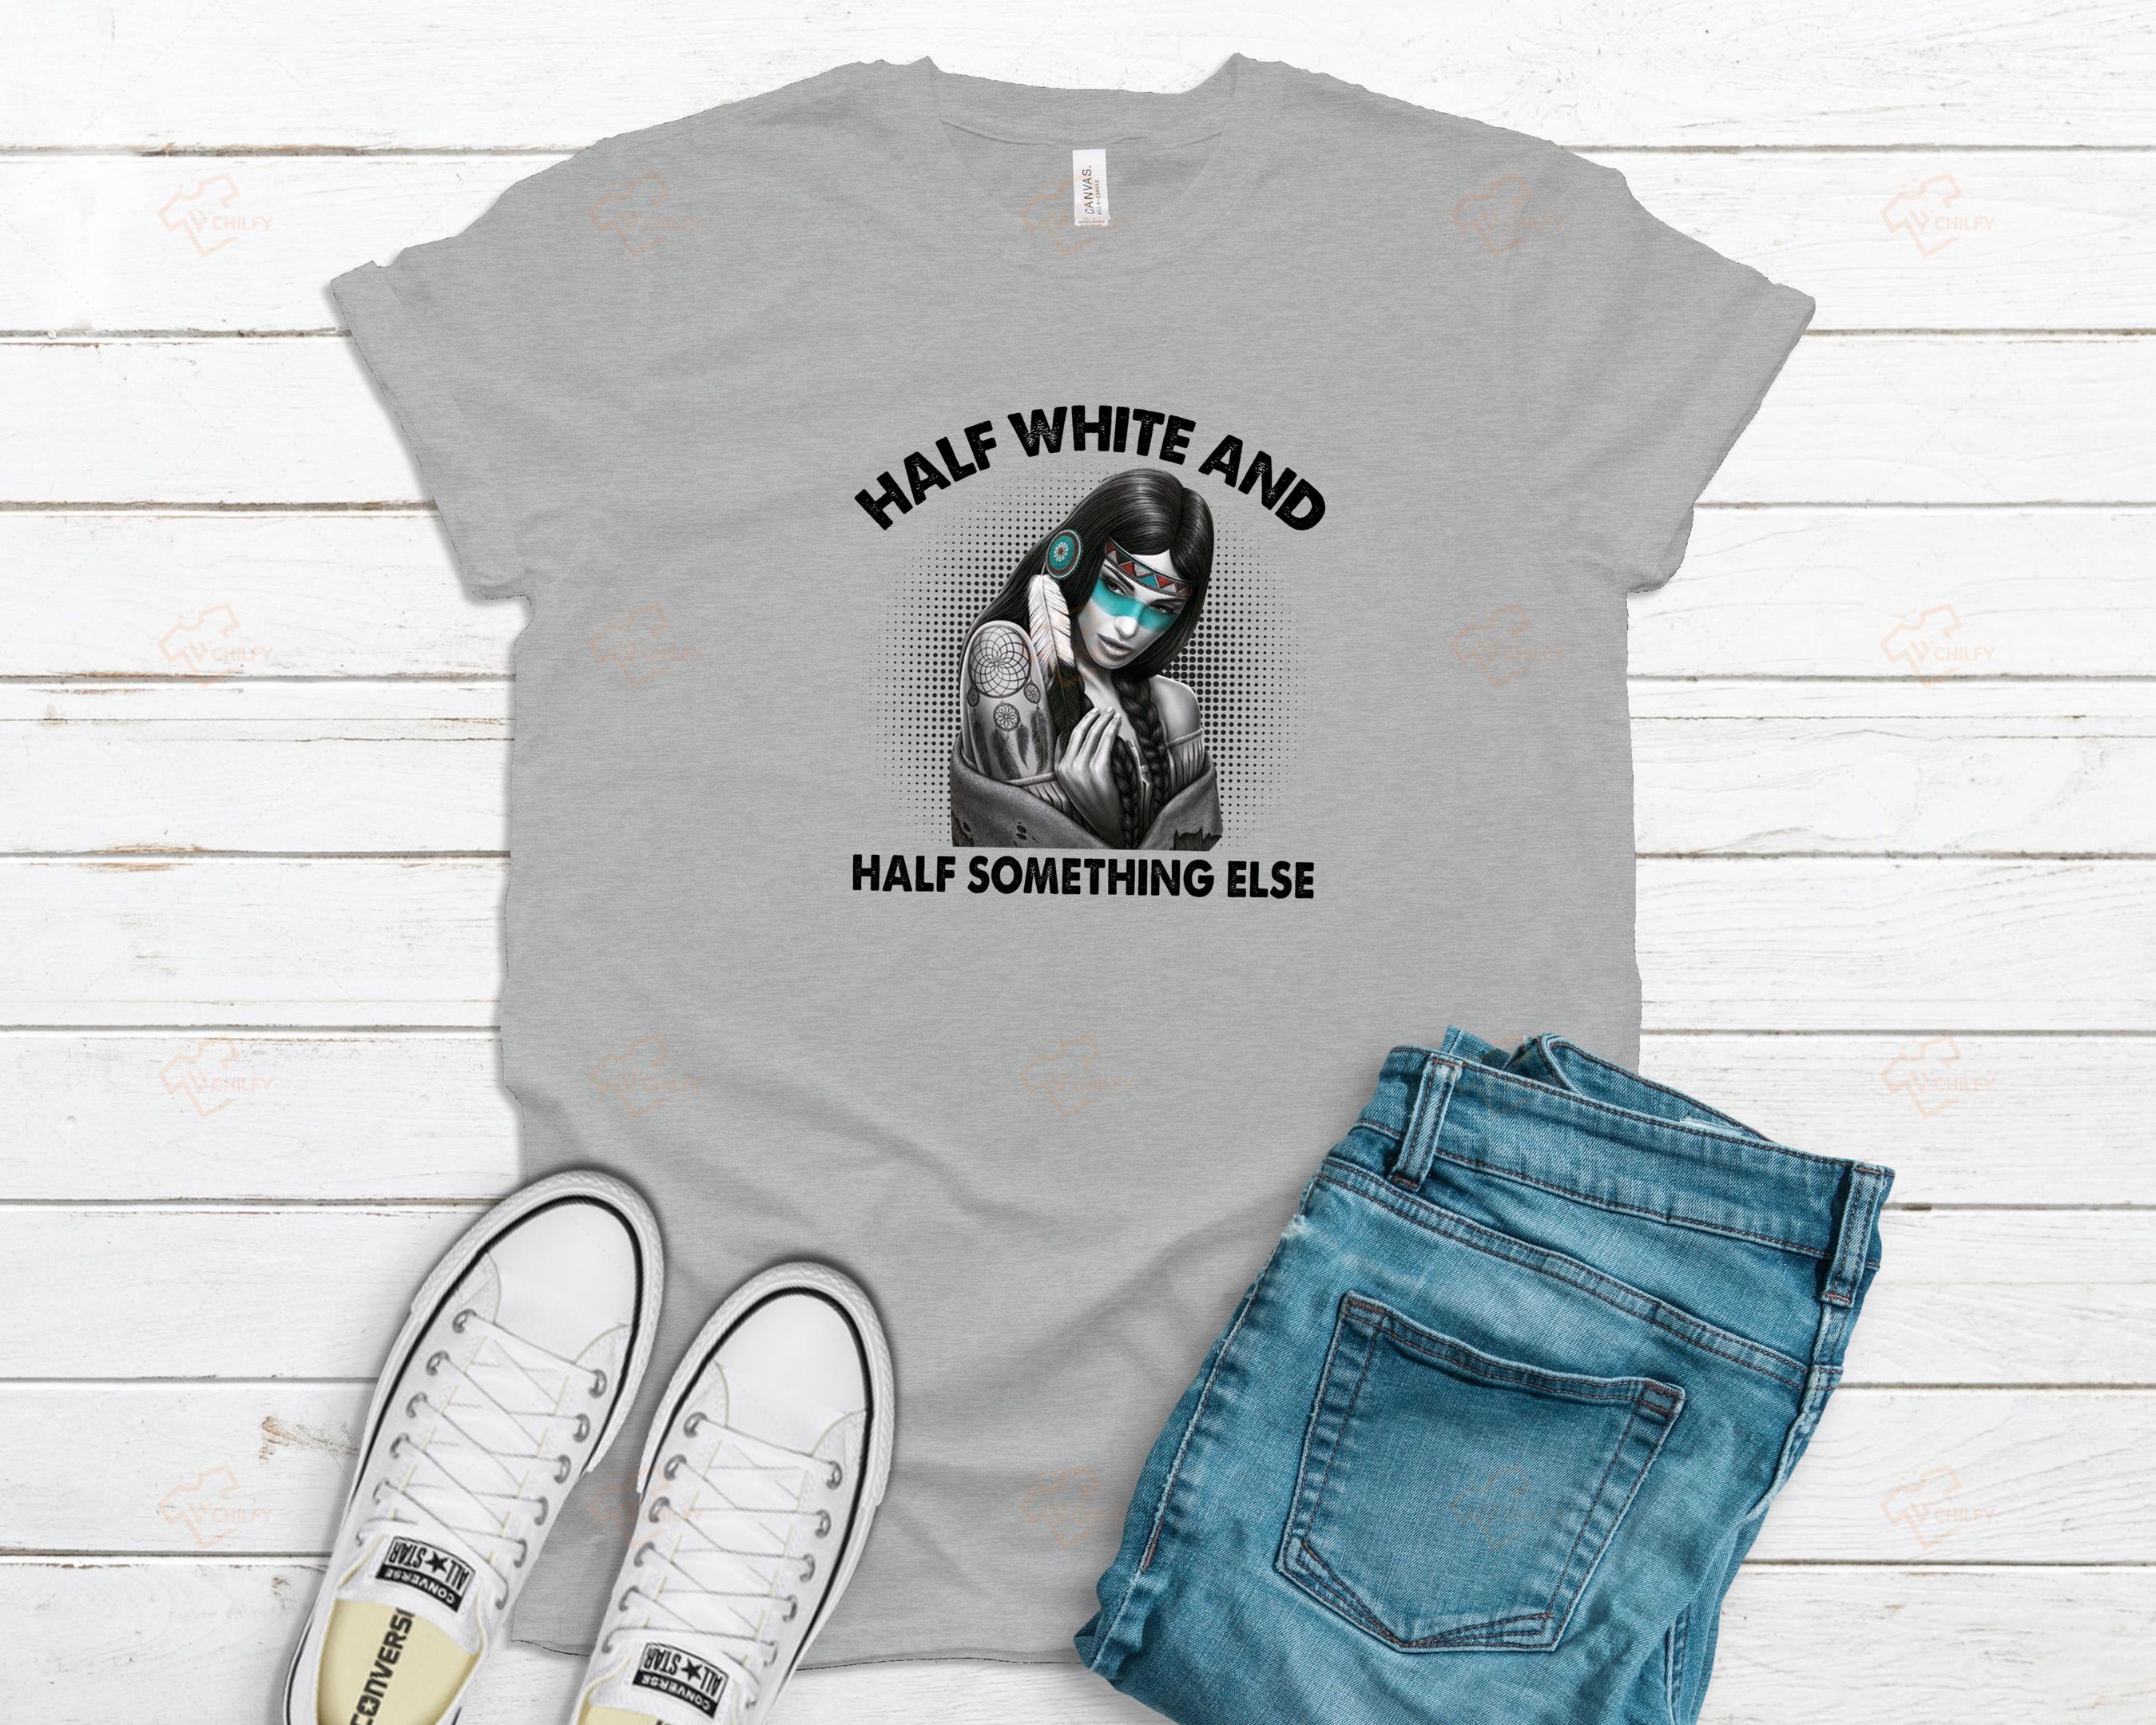 Half White And half something else, Indigenous woman shirt, Native shirt, feminism, Native pride